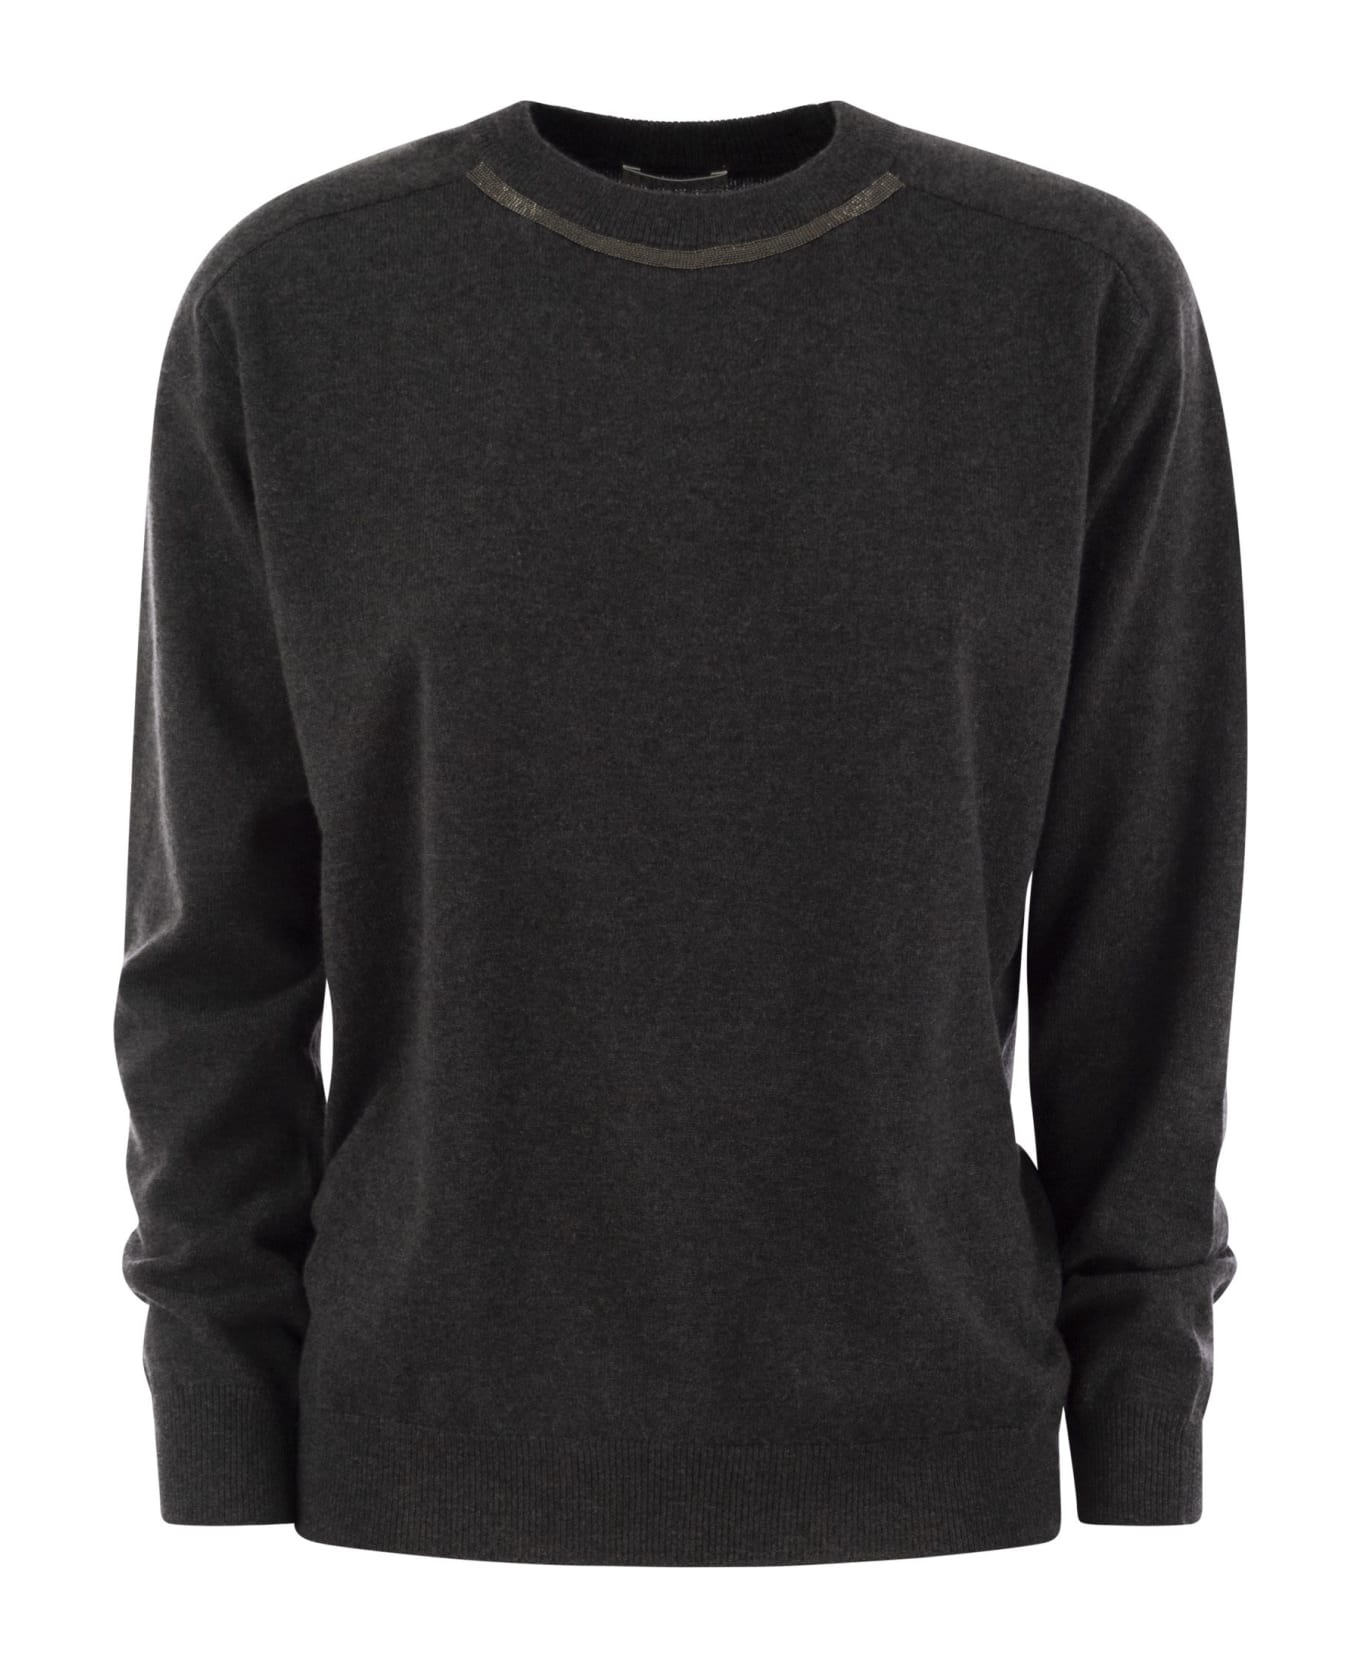 Brunello Cucinelli Cashmere Sweater With Neck Jewel - Anthracite